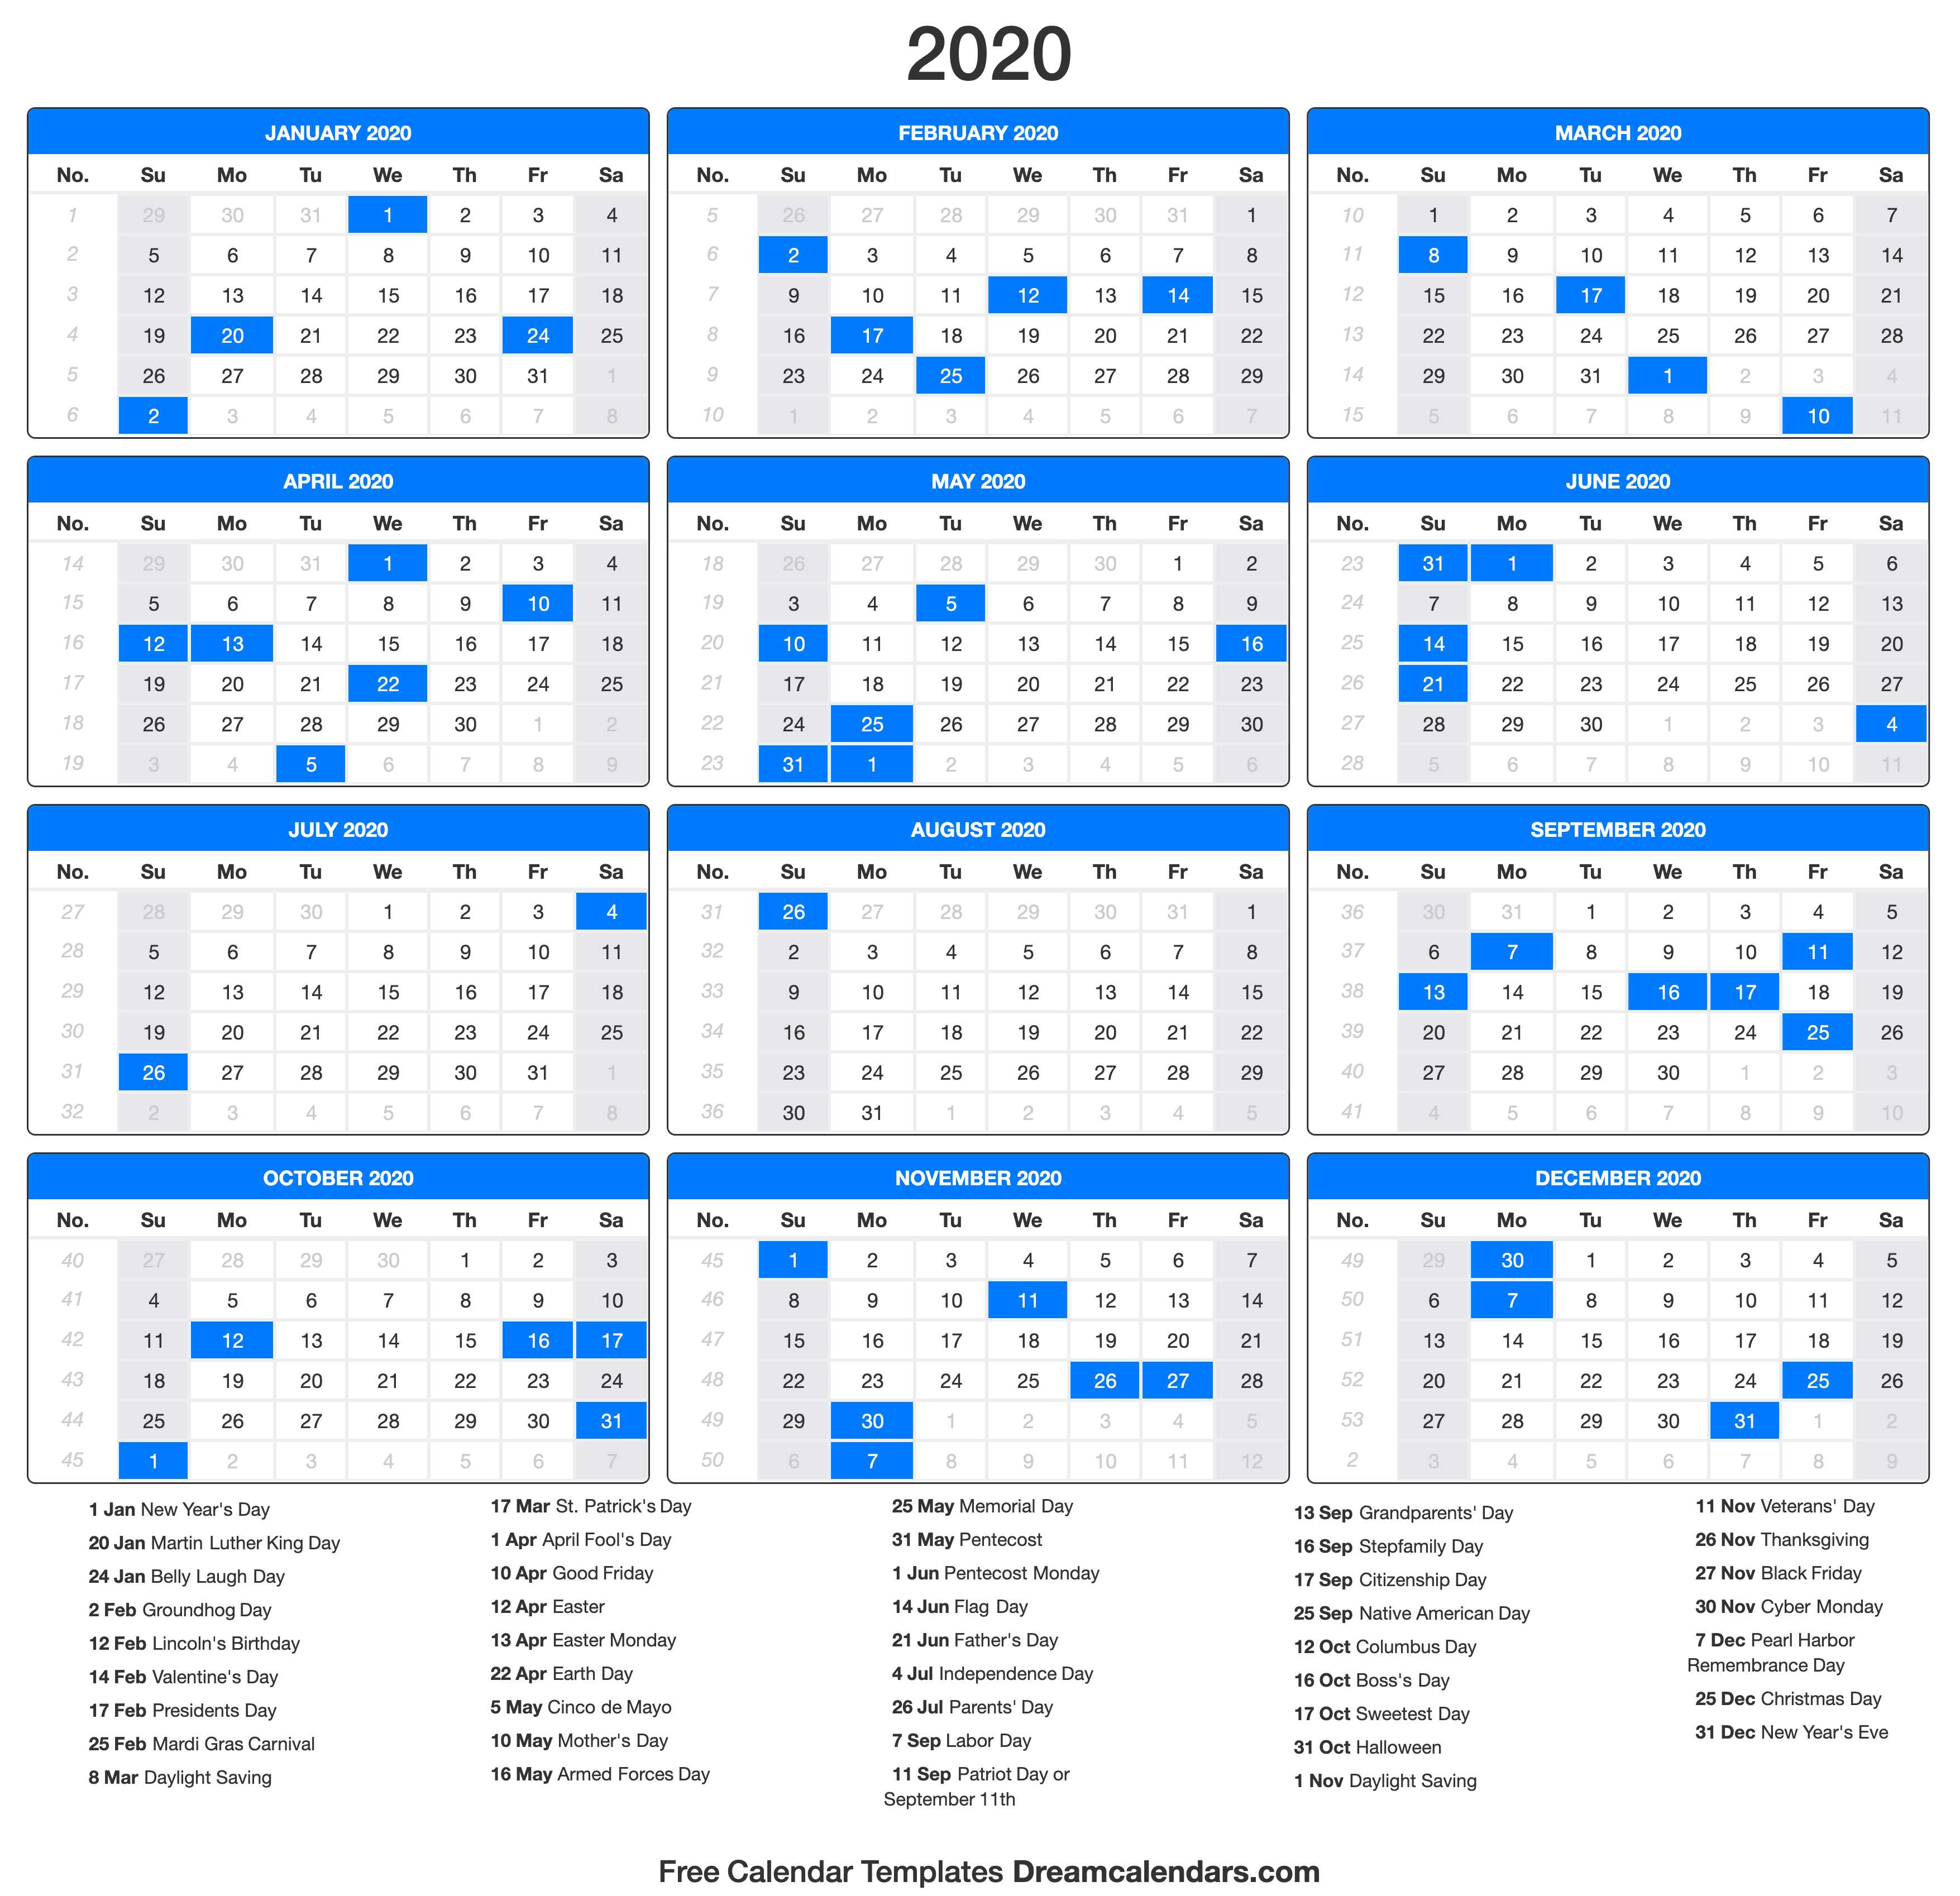 Download 2020 calendar printable with holidays list (1)